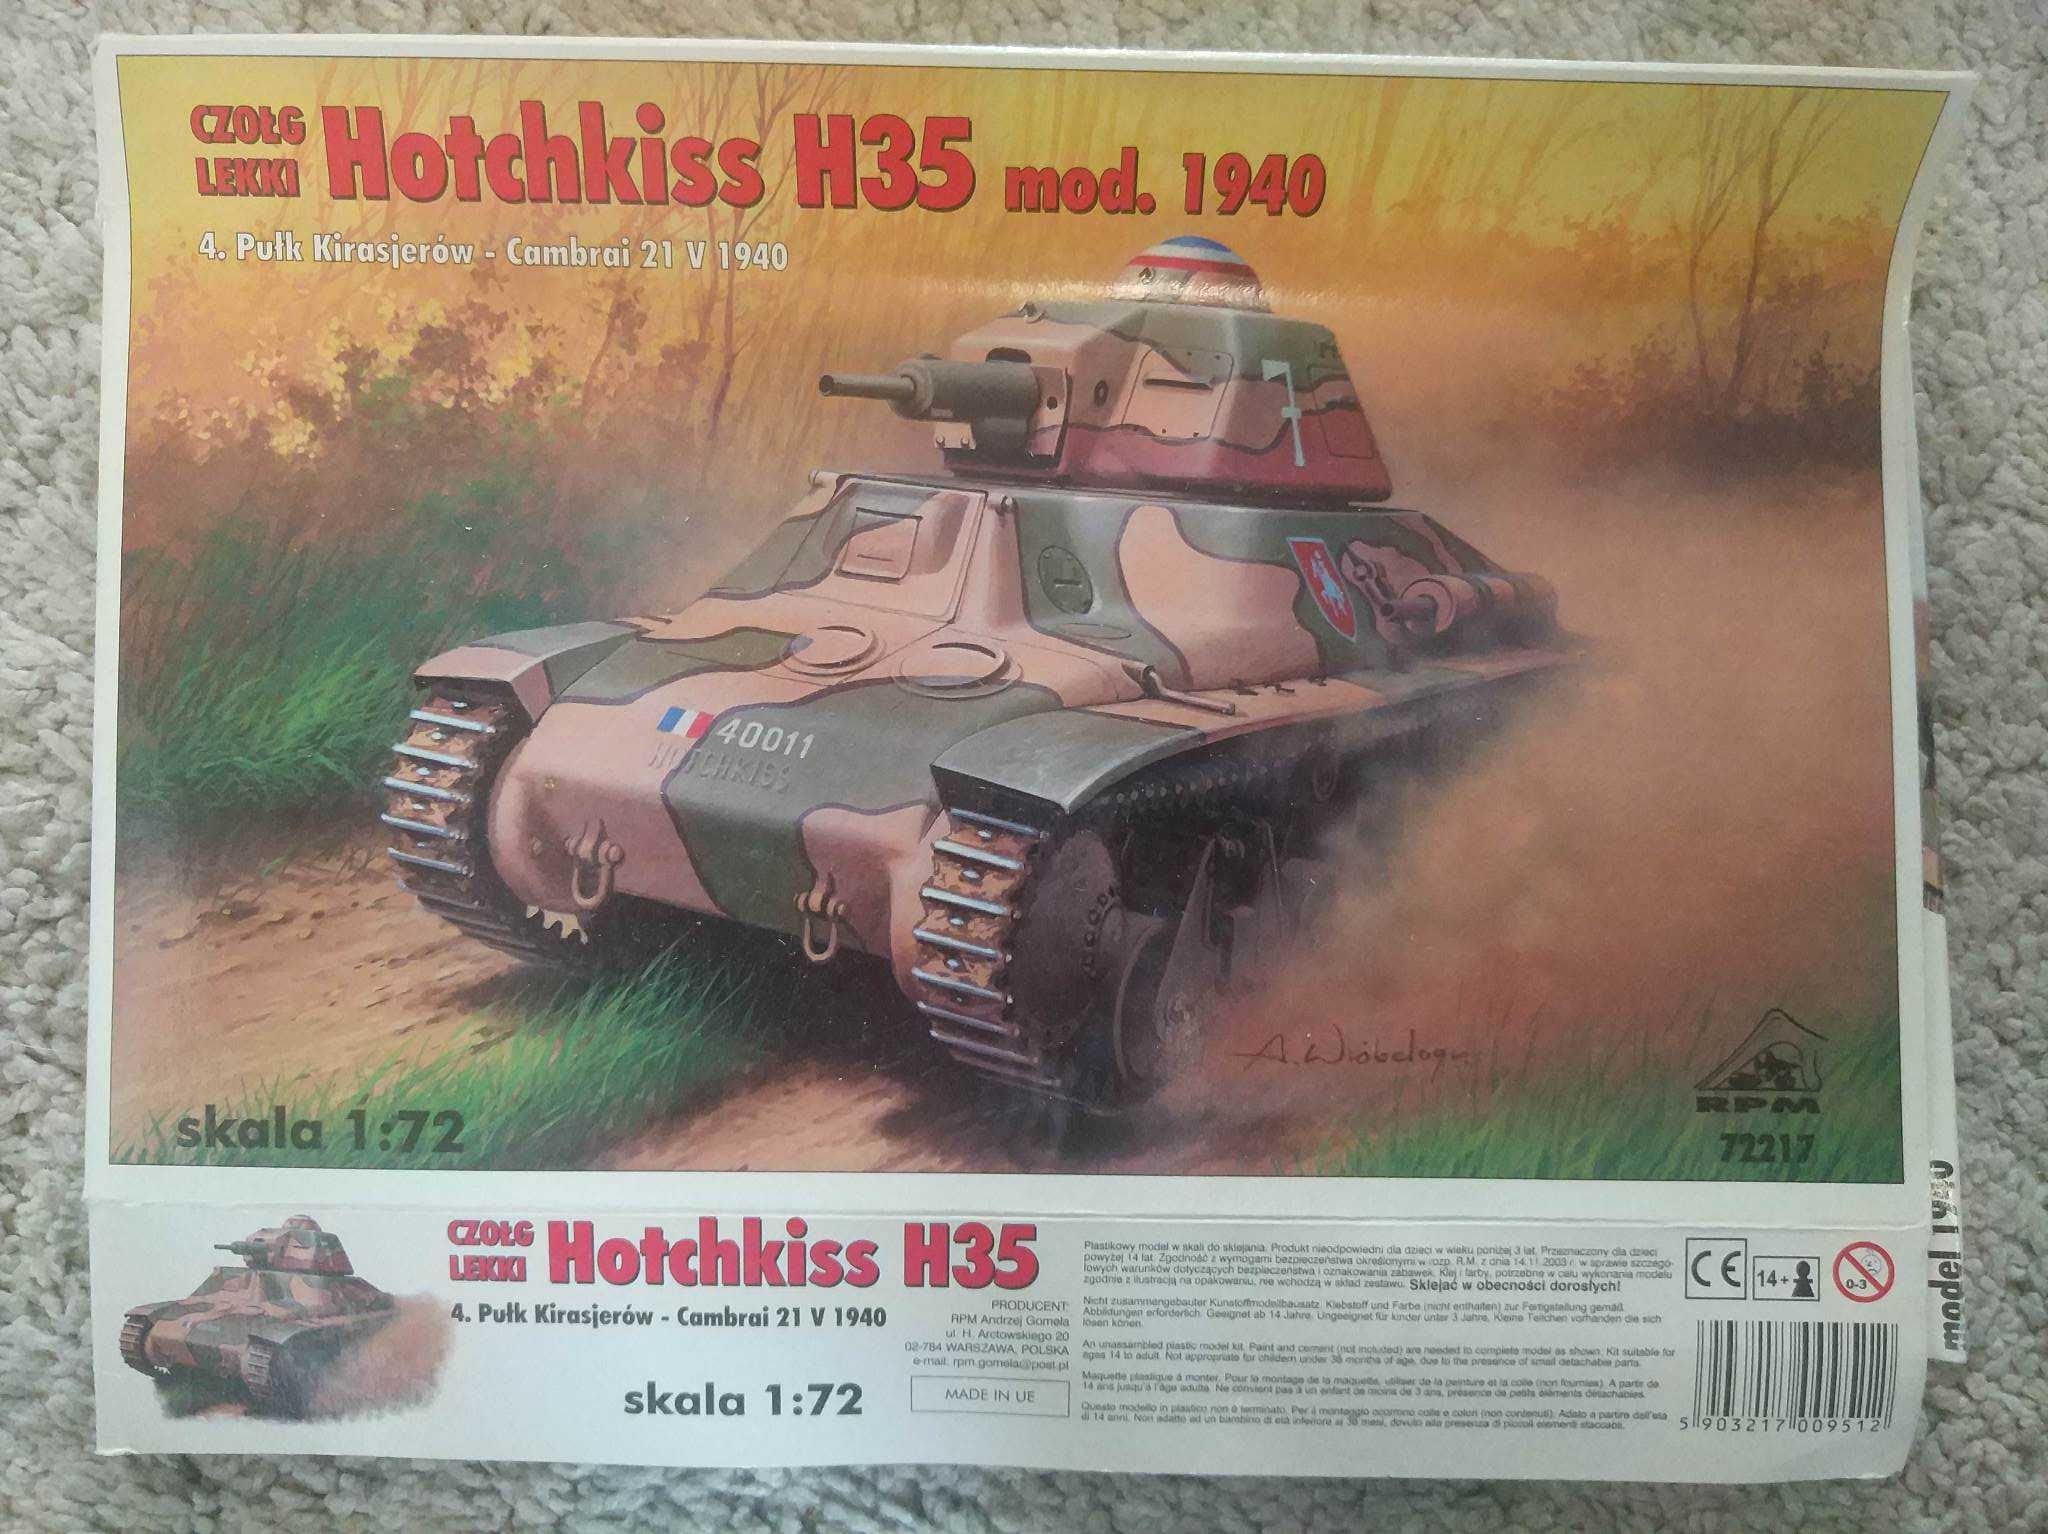 RPM 72217 Light Tank Hotchkiss H35 (model 1940)